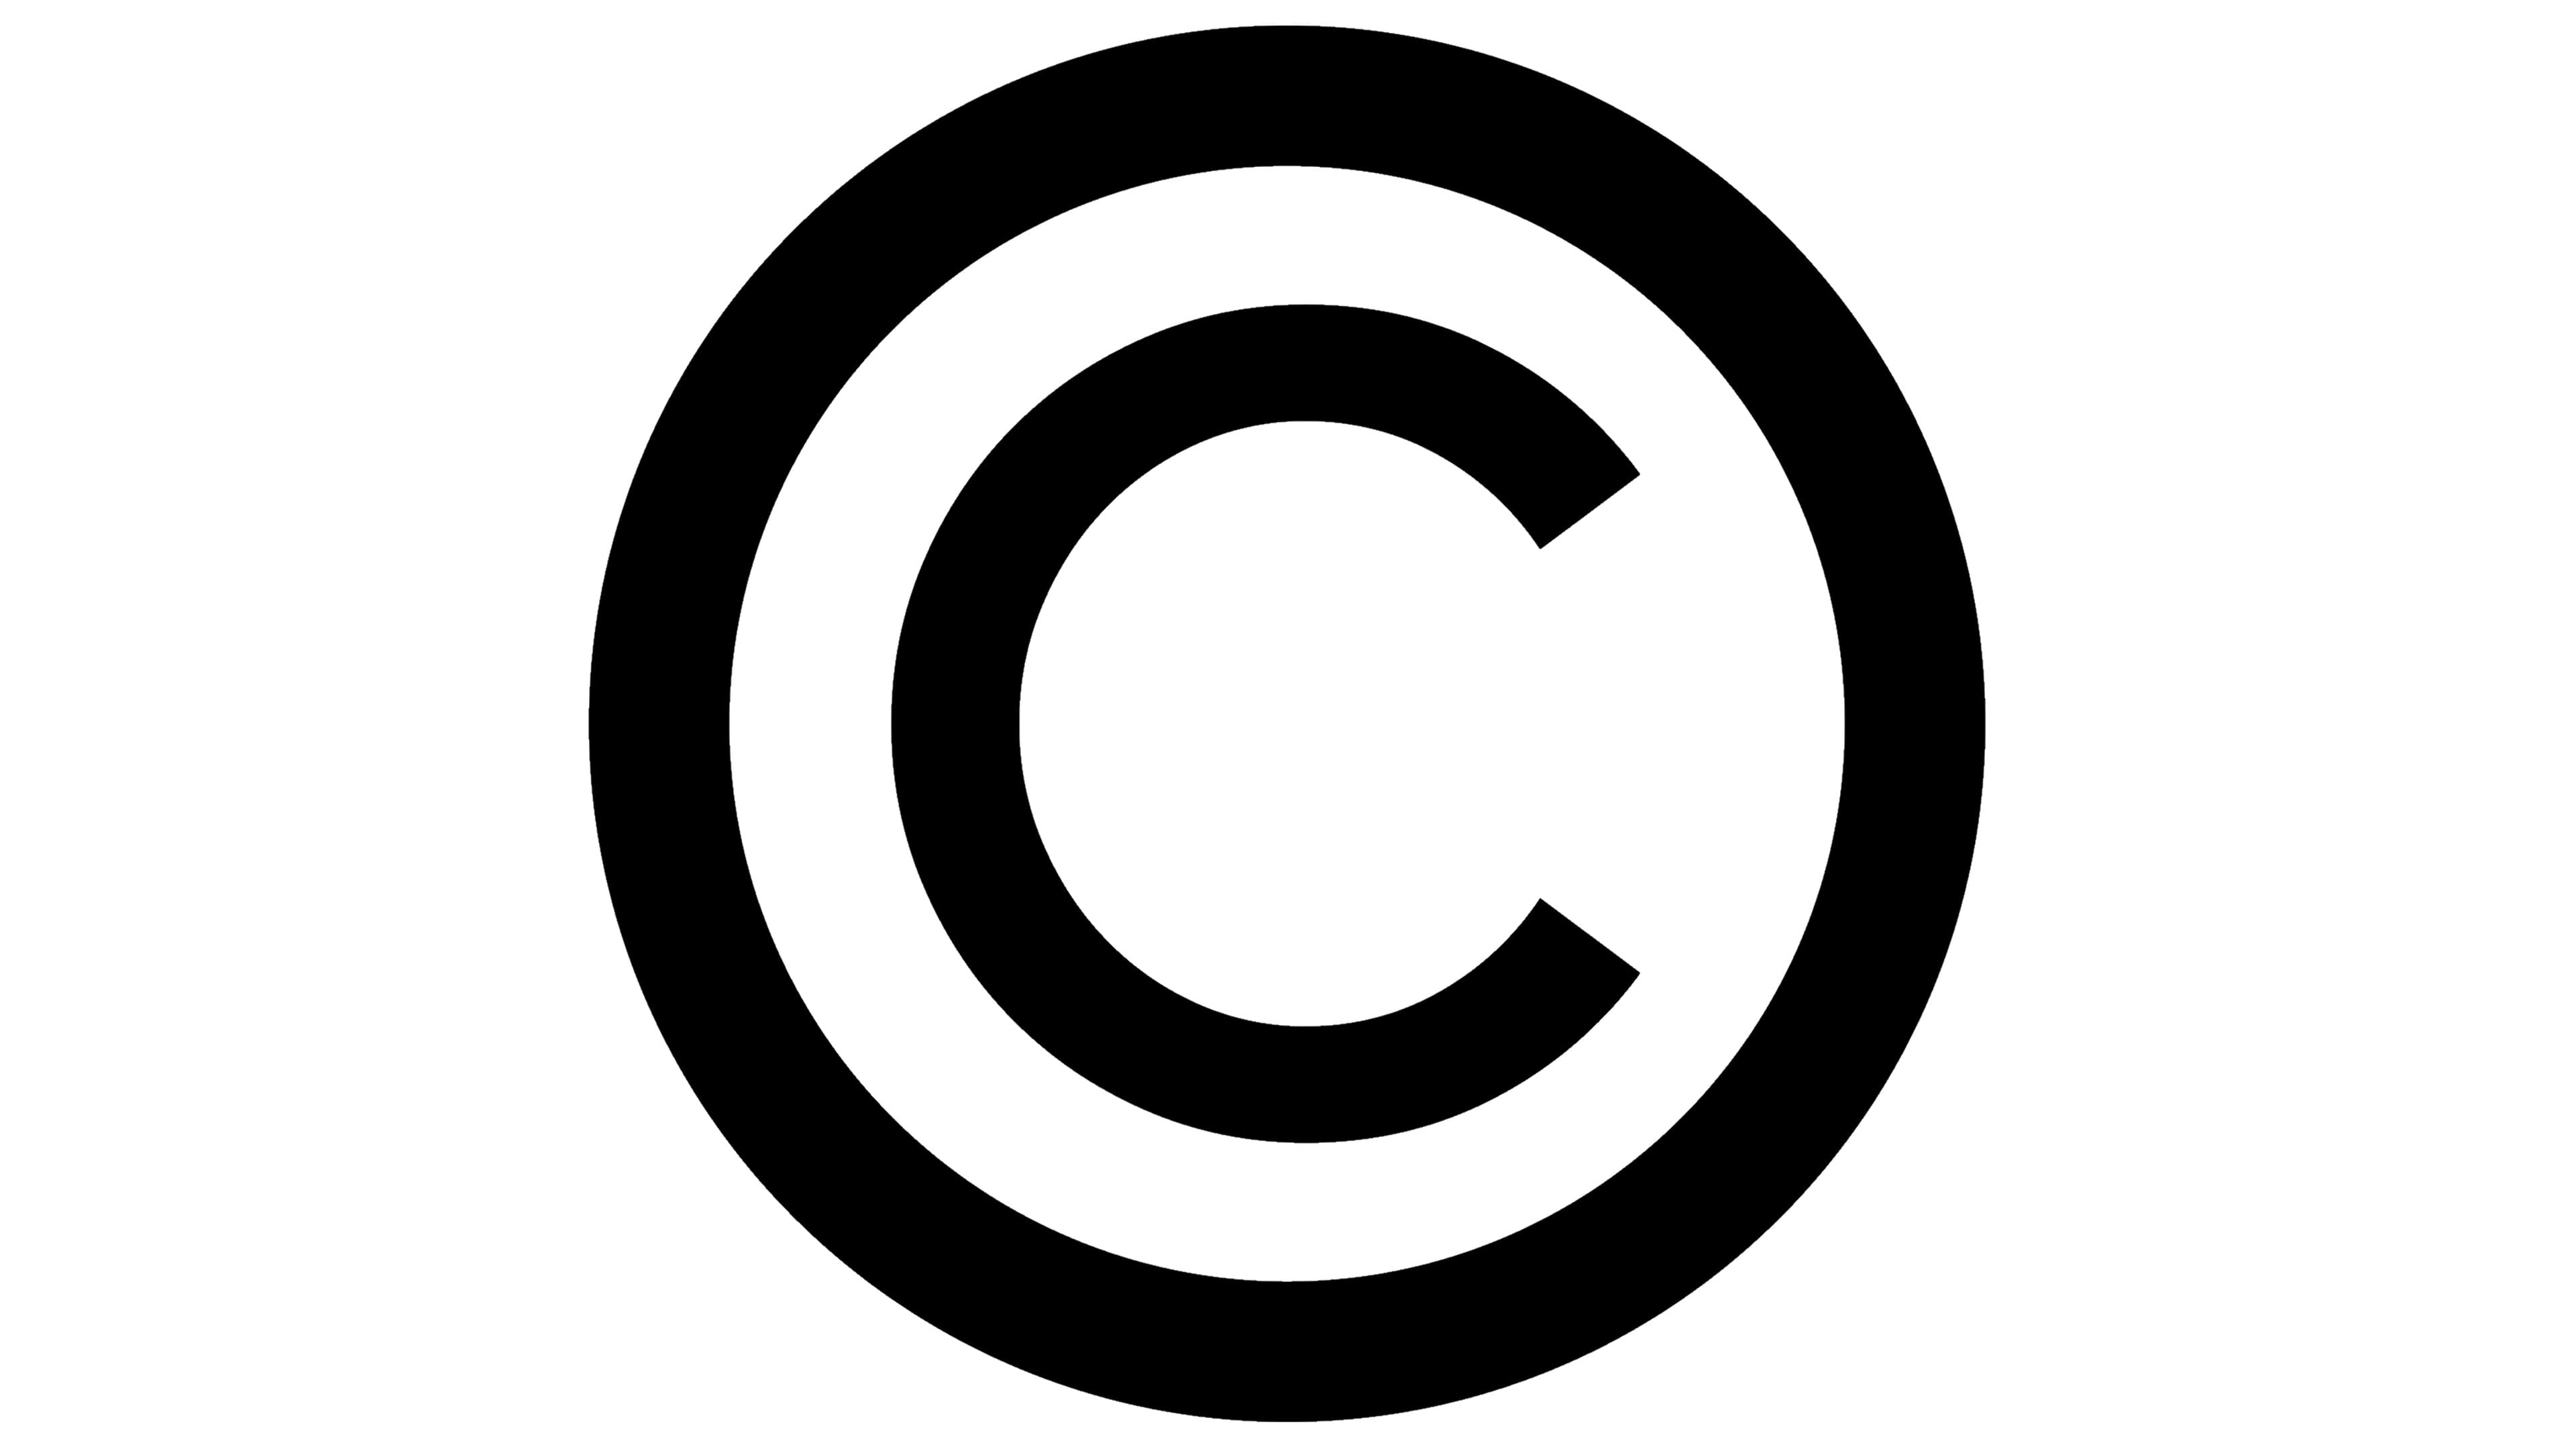 copyright symbol text